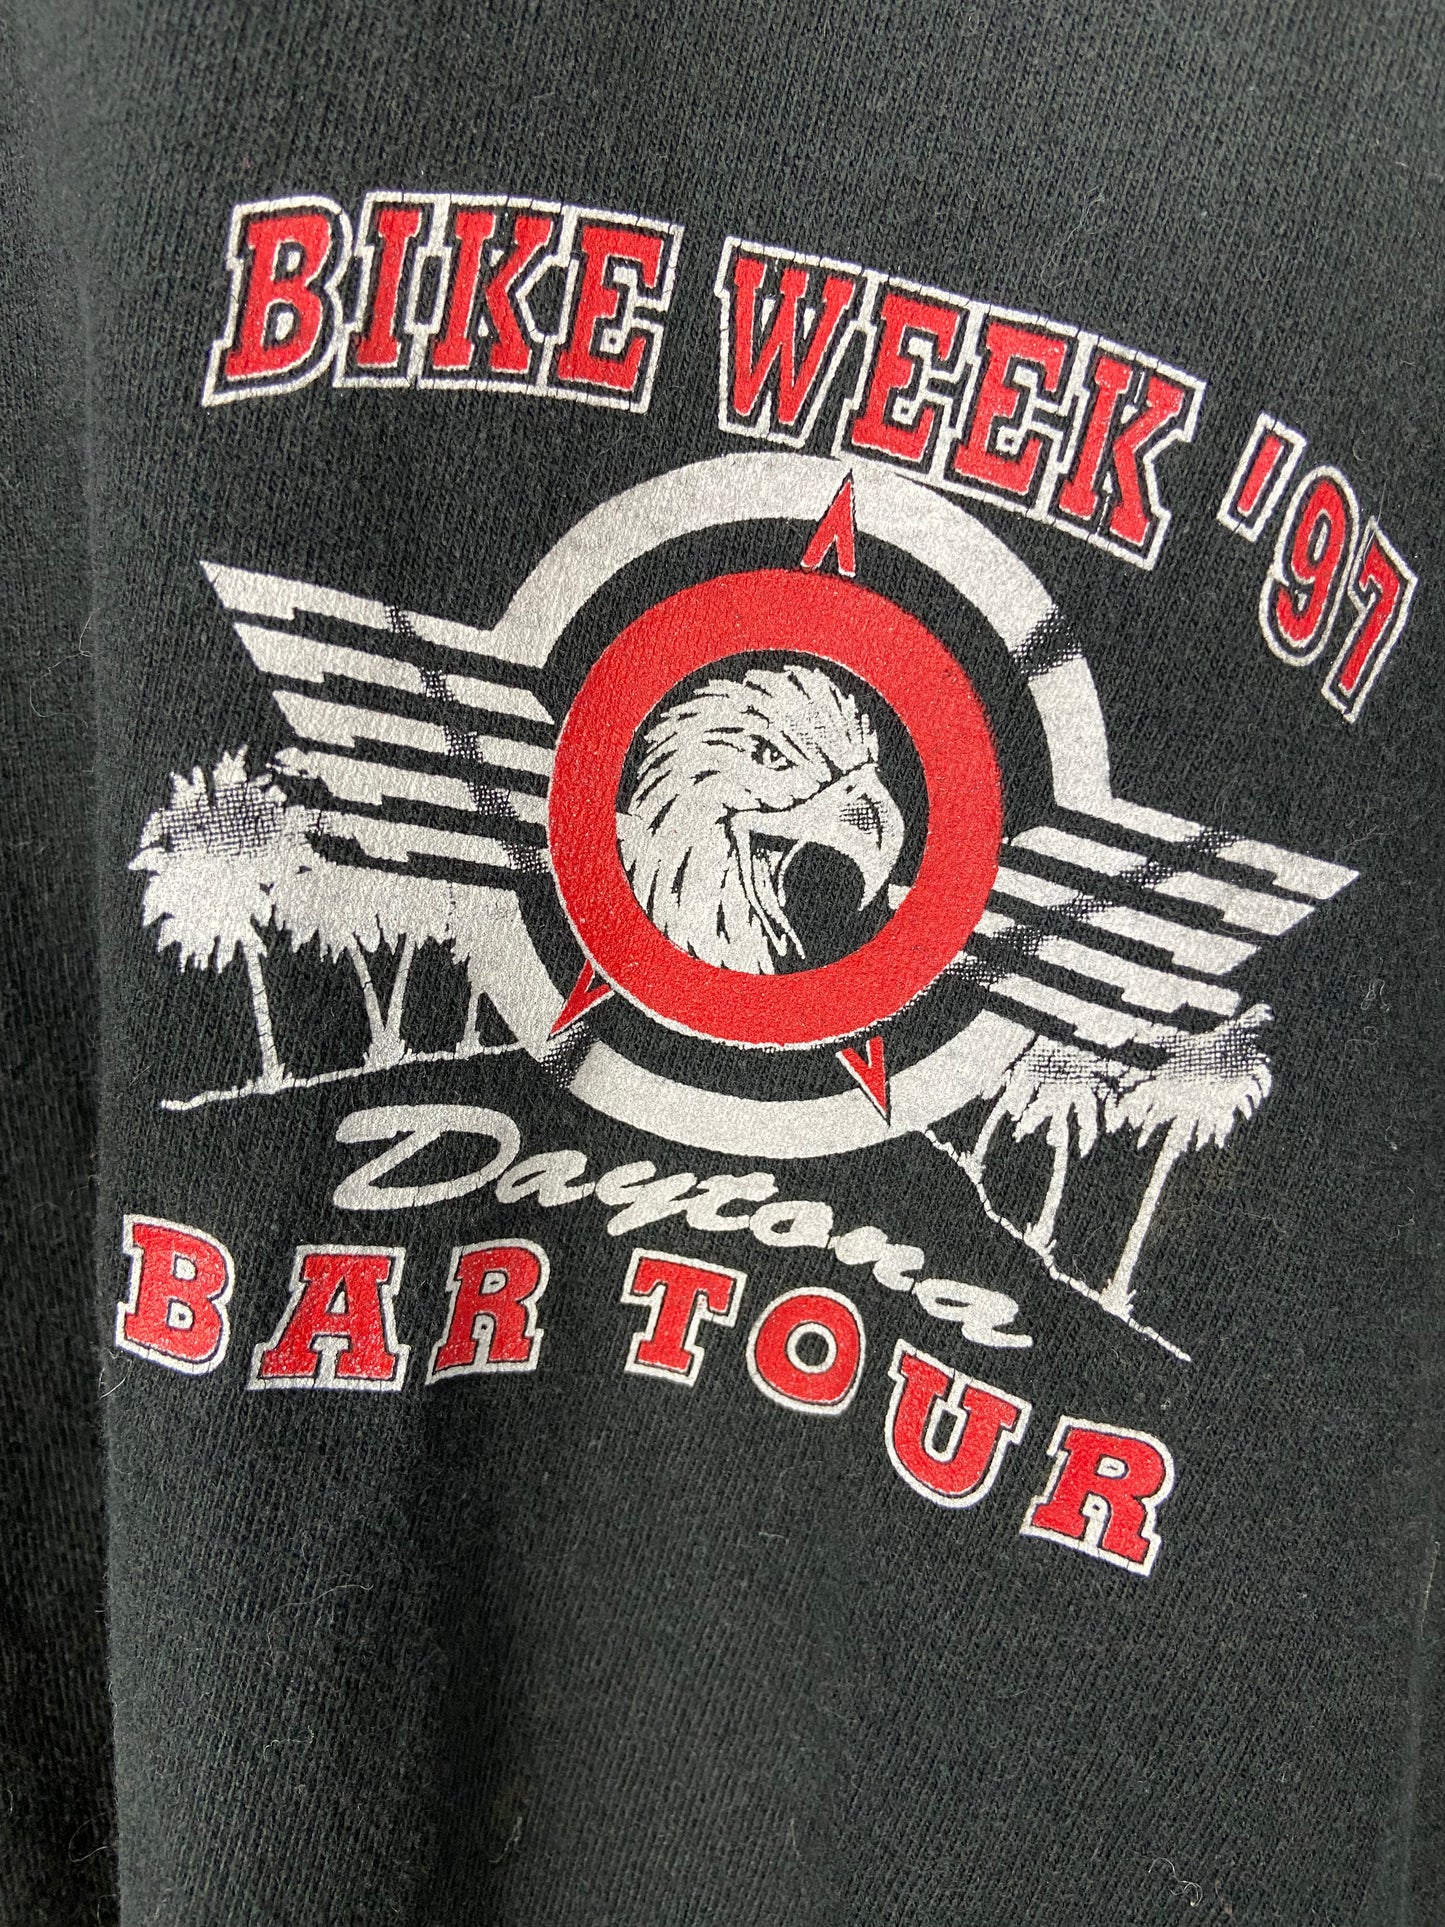 Load image into Gallery viewer, VTG Bike Week Daytona Bar Tour Tee Sz S/M
